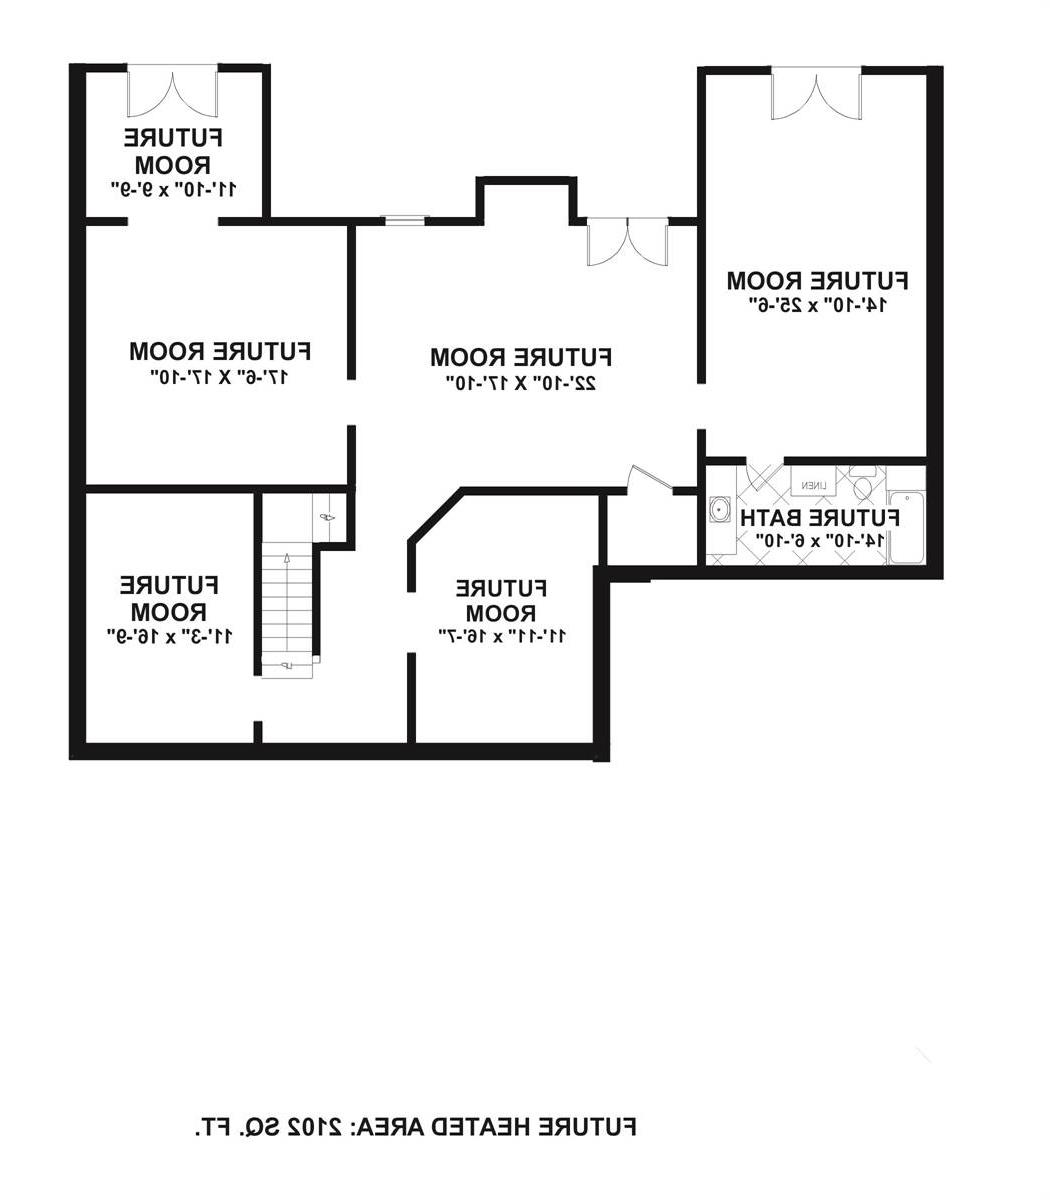 Basement Plan image of Meridian Bay House Plan